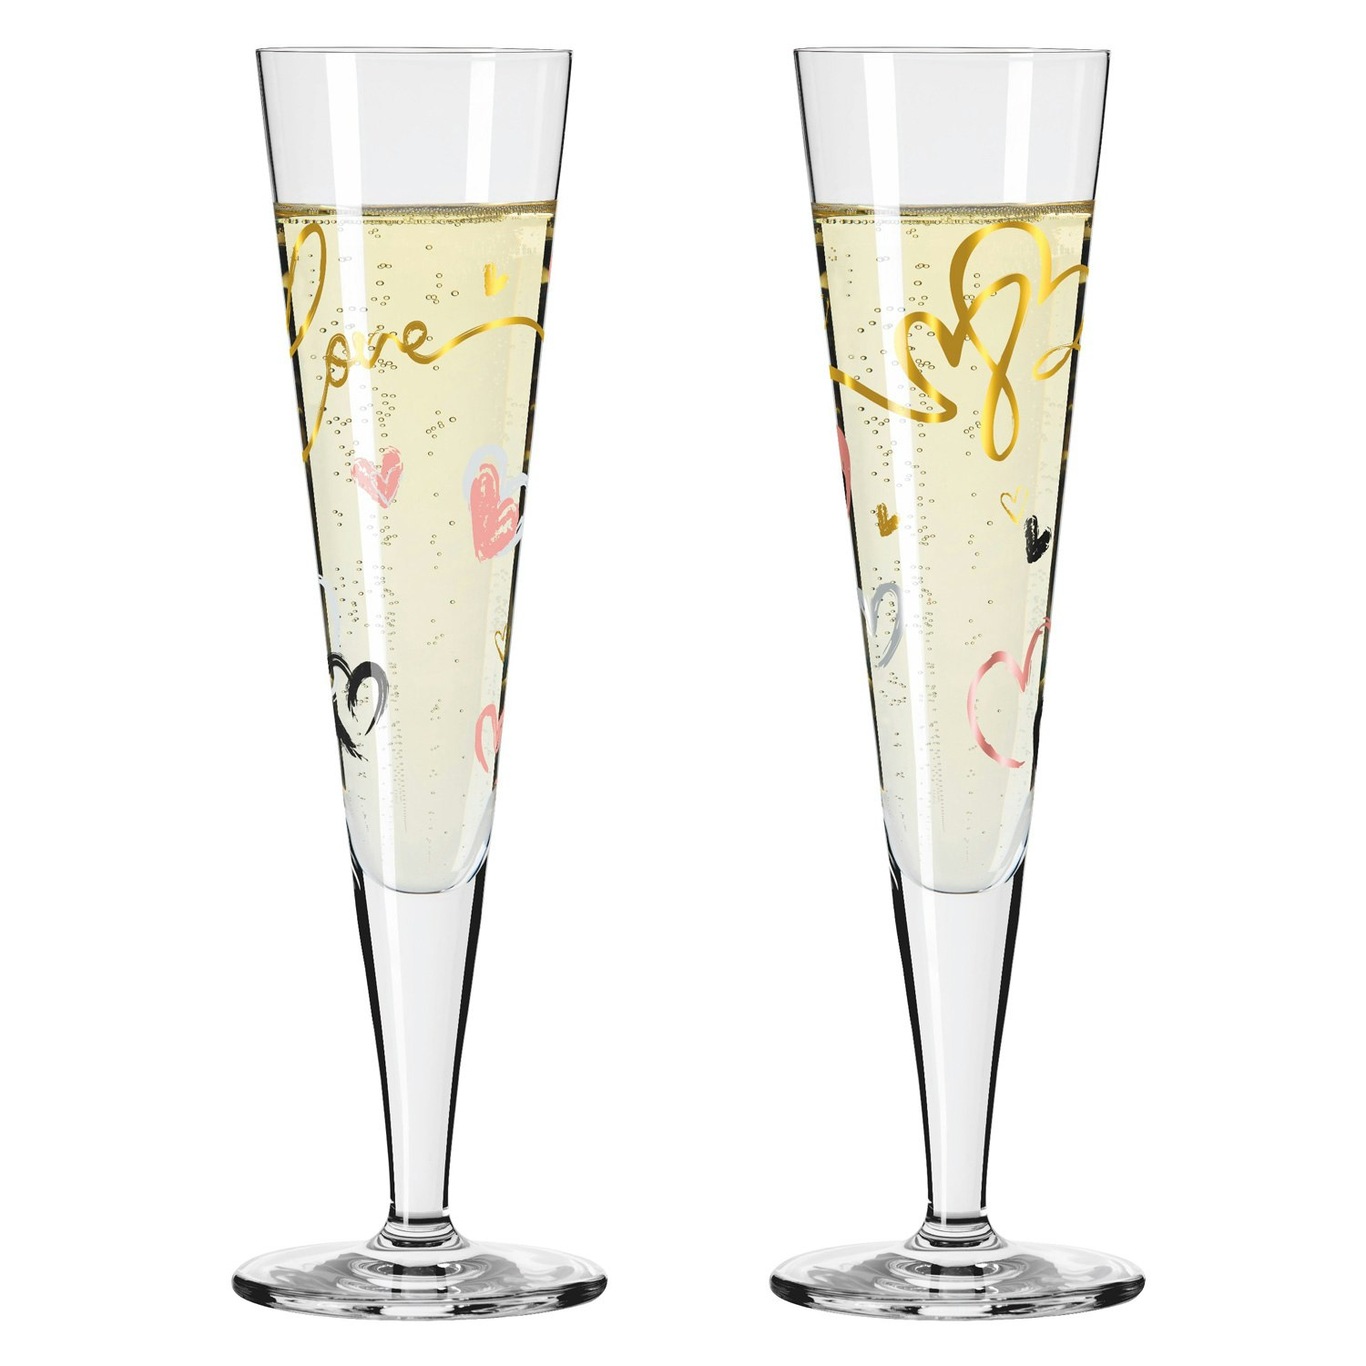 Goldnacht Champagnergläser 2-er Set, H23